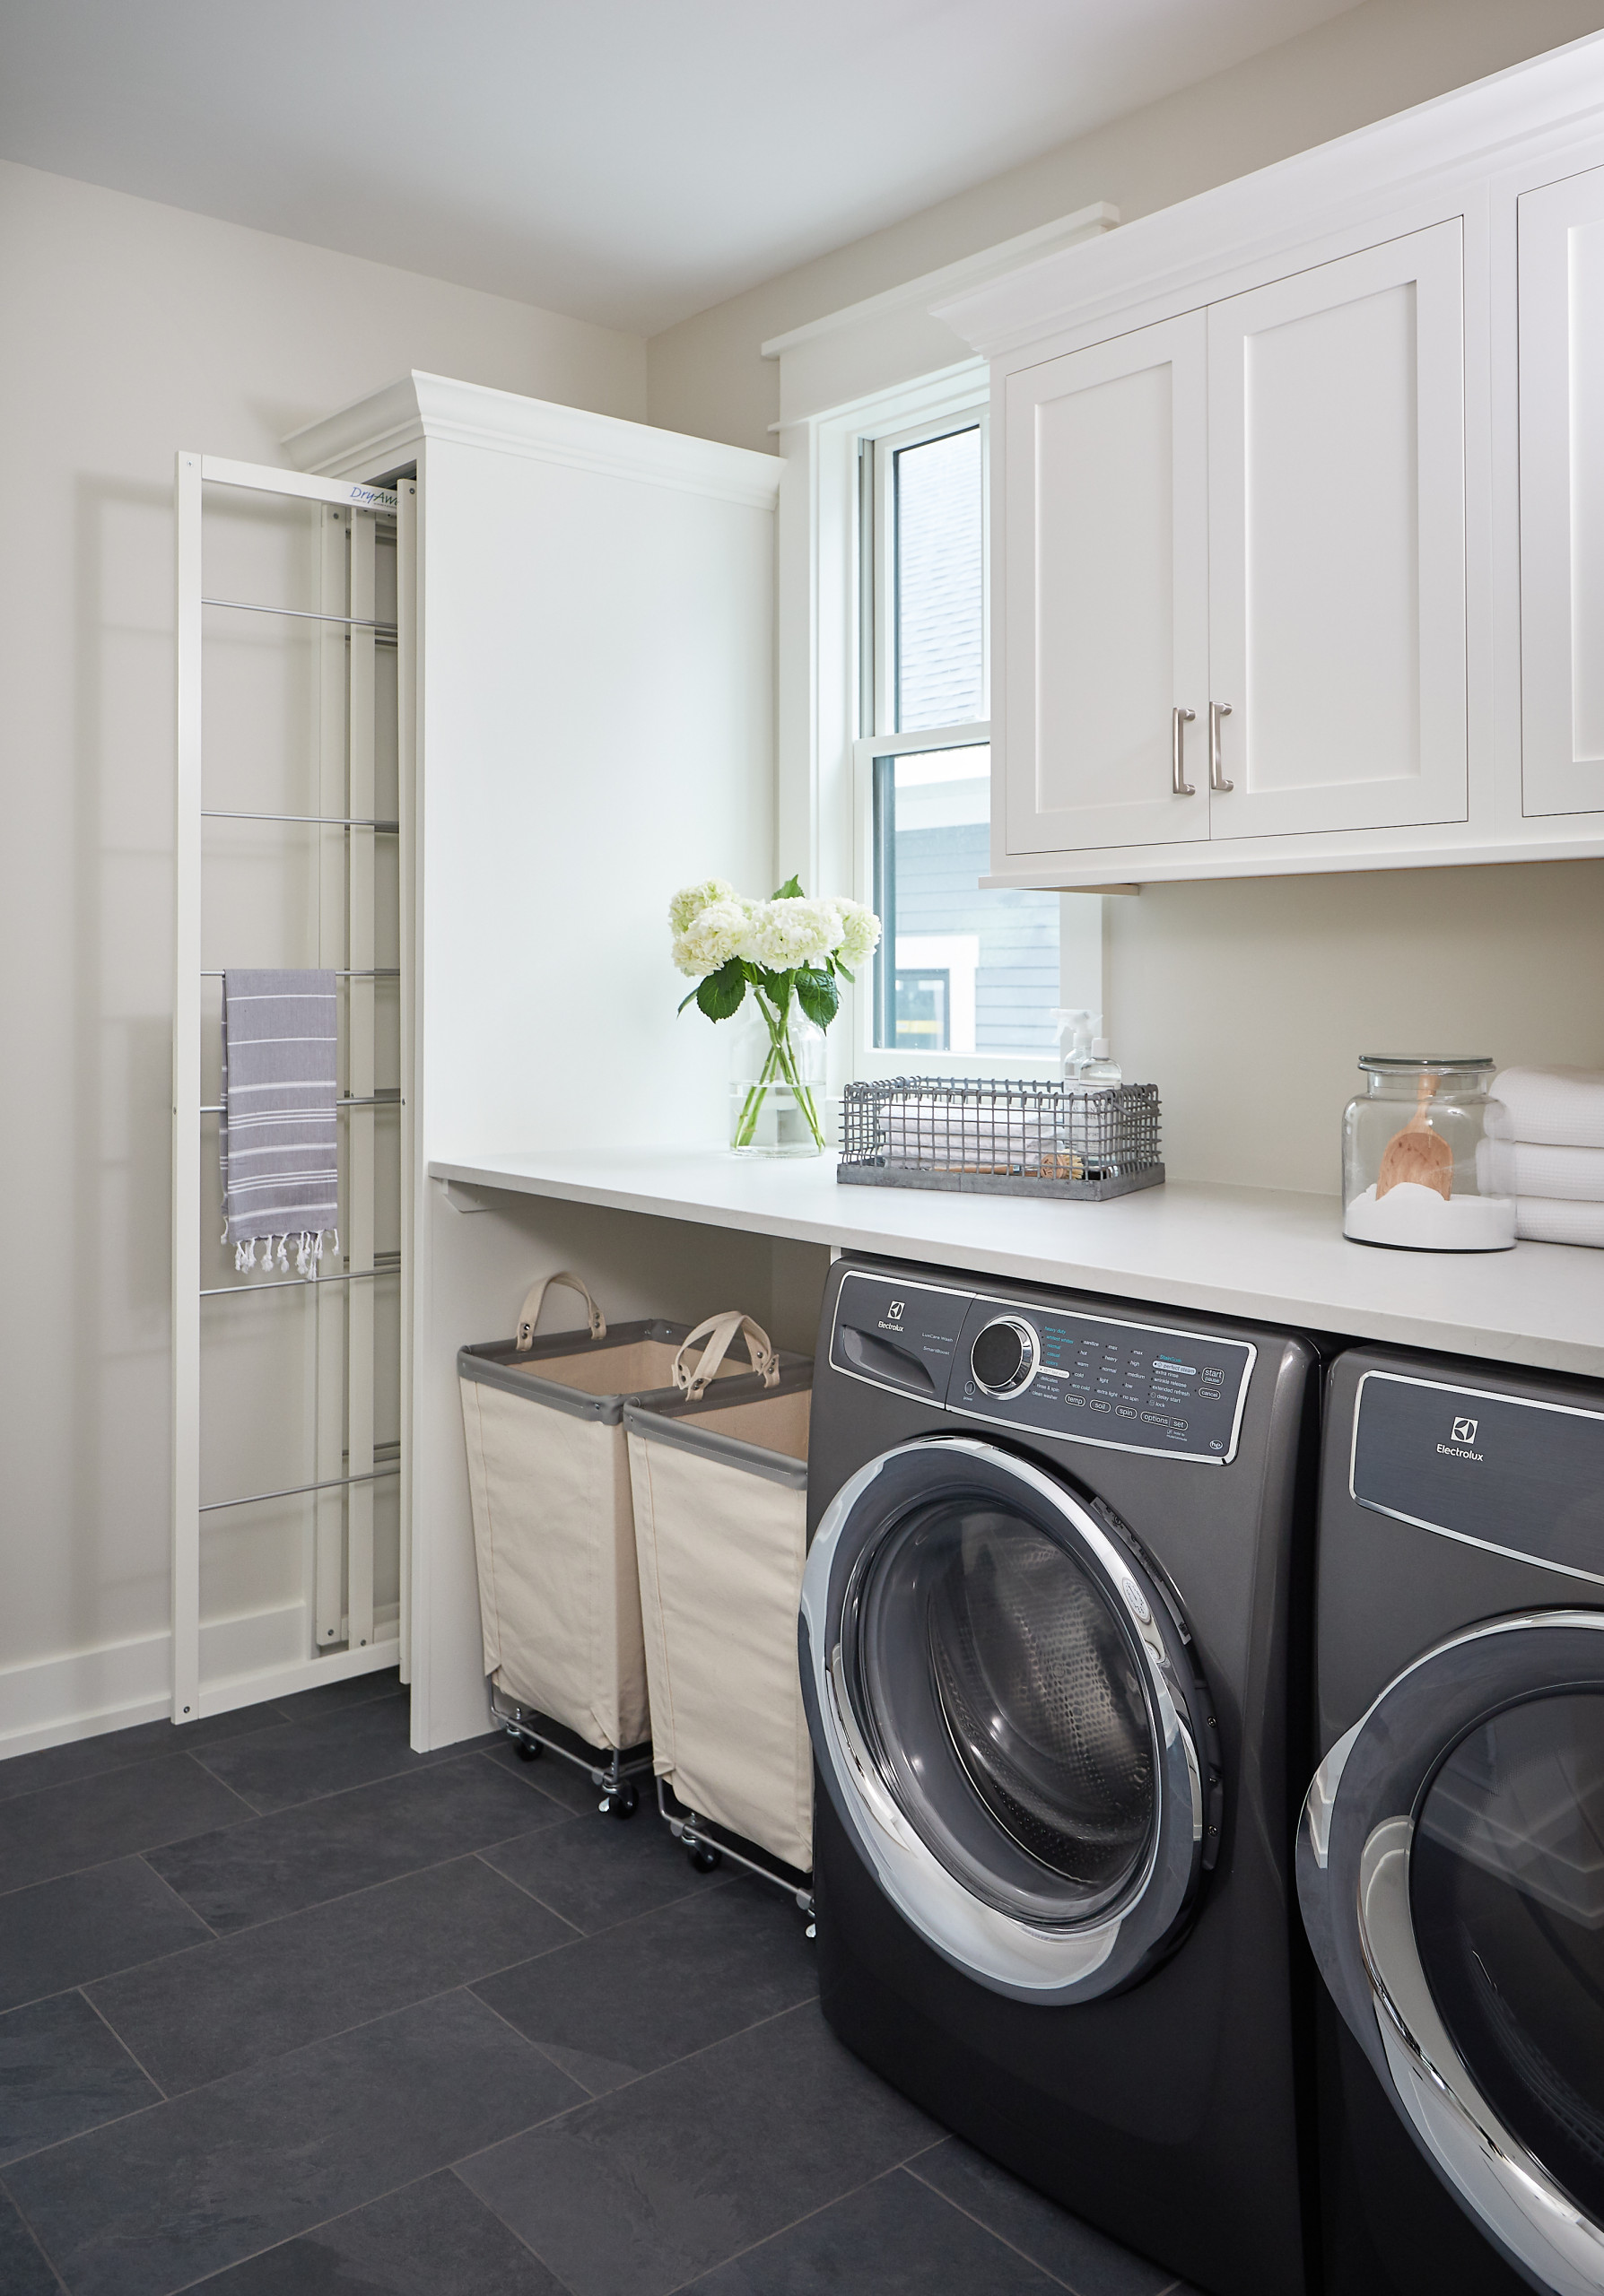 Laundry Room Design Ideas : 30 Nice Small Laundry Room ...